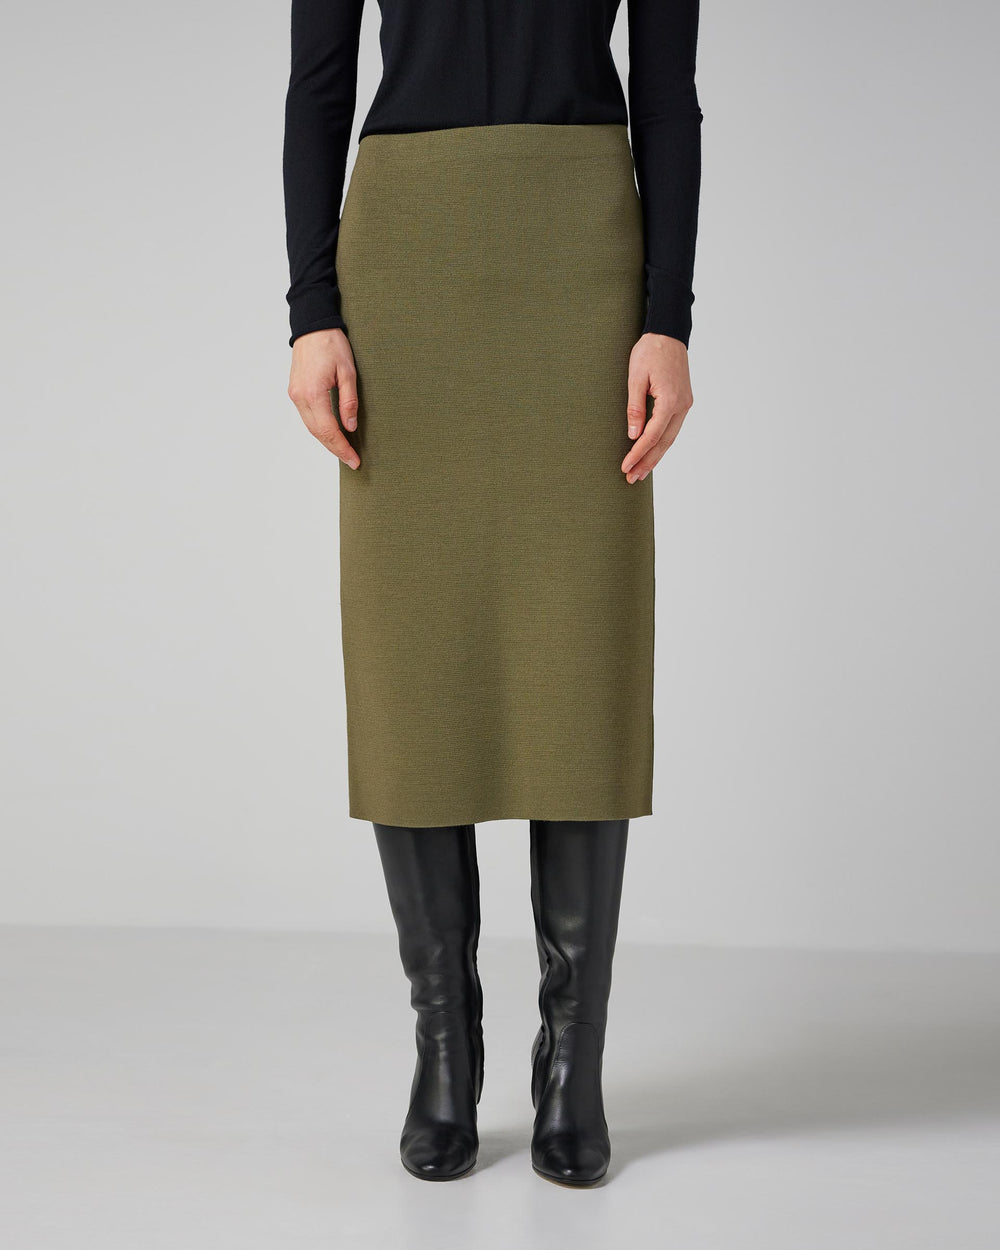 Daphne Skirt in Merino Wool, Army Green